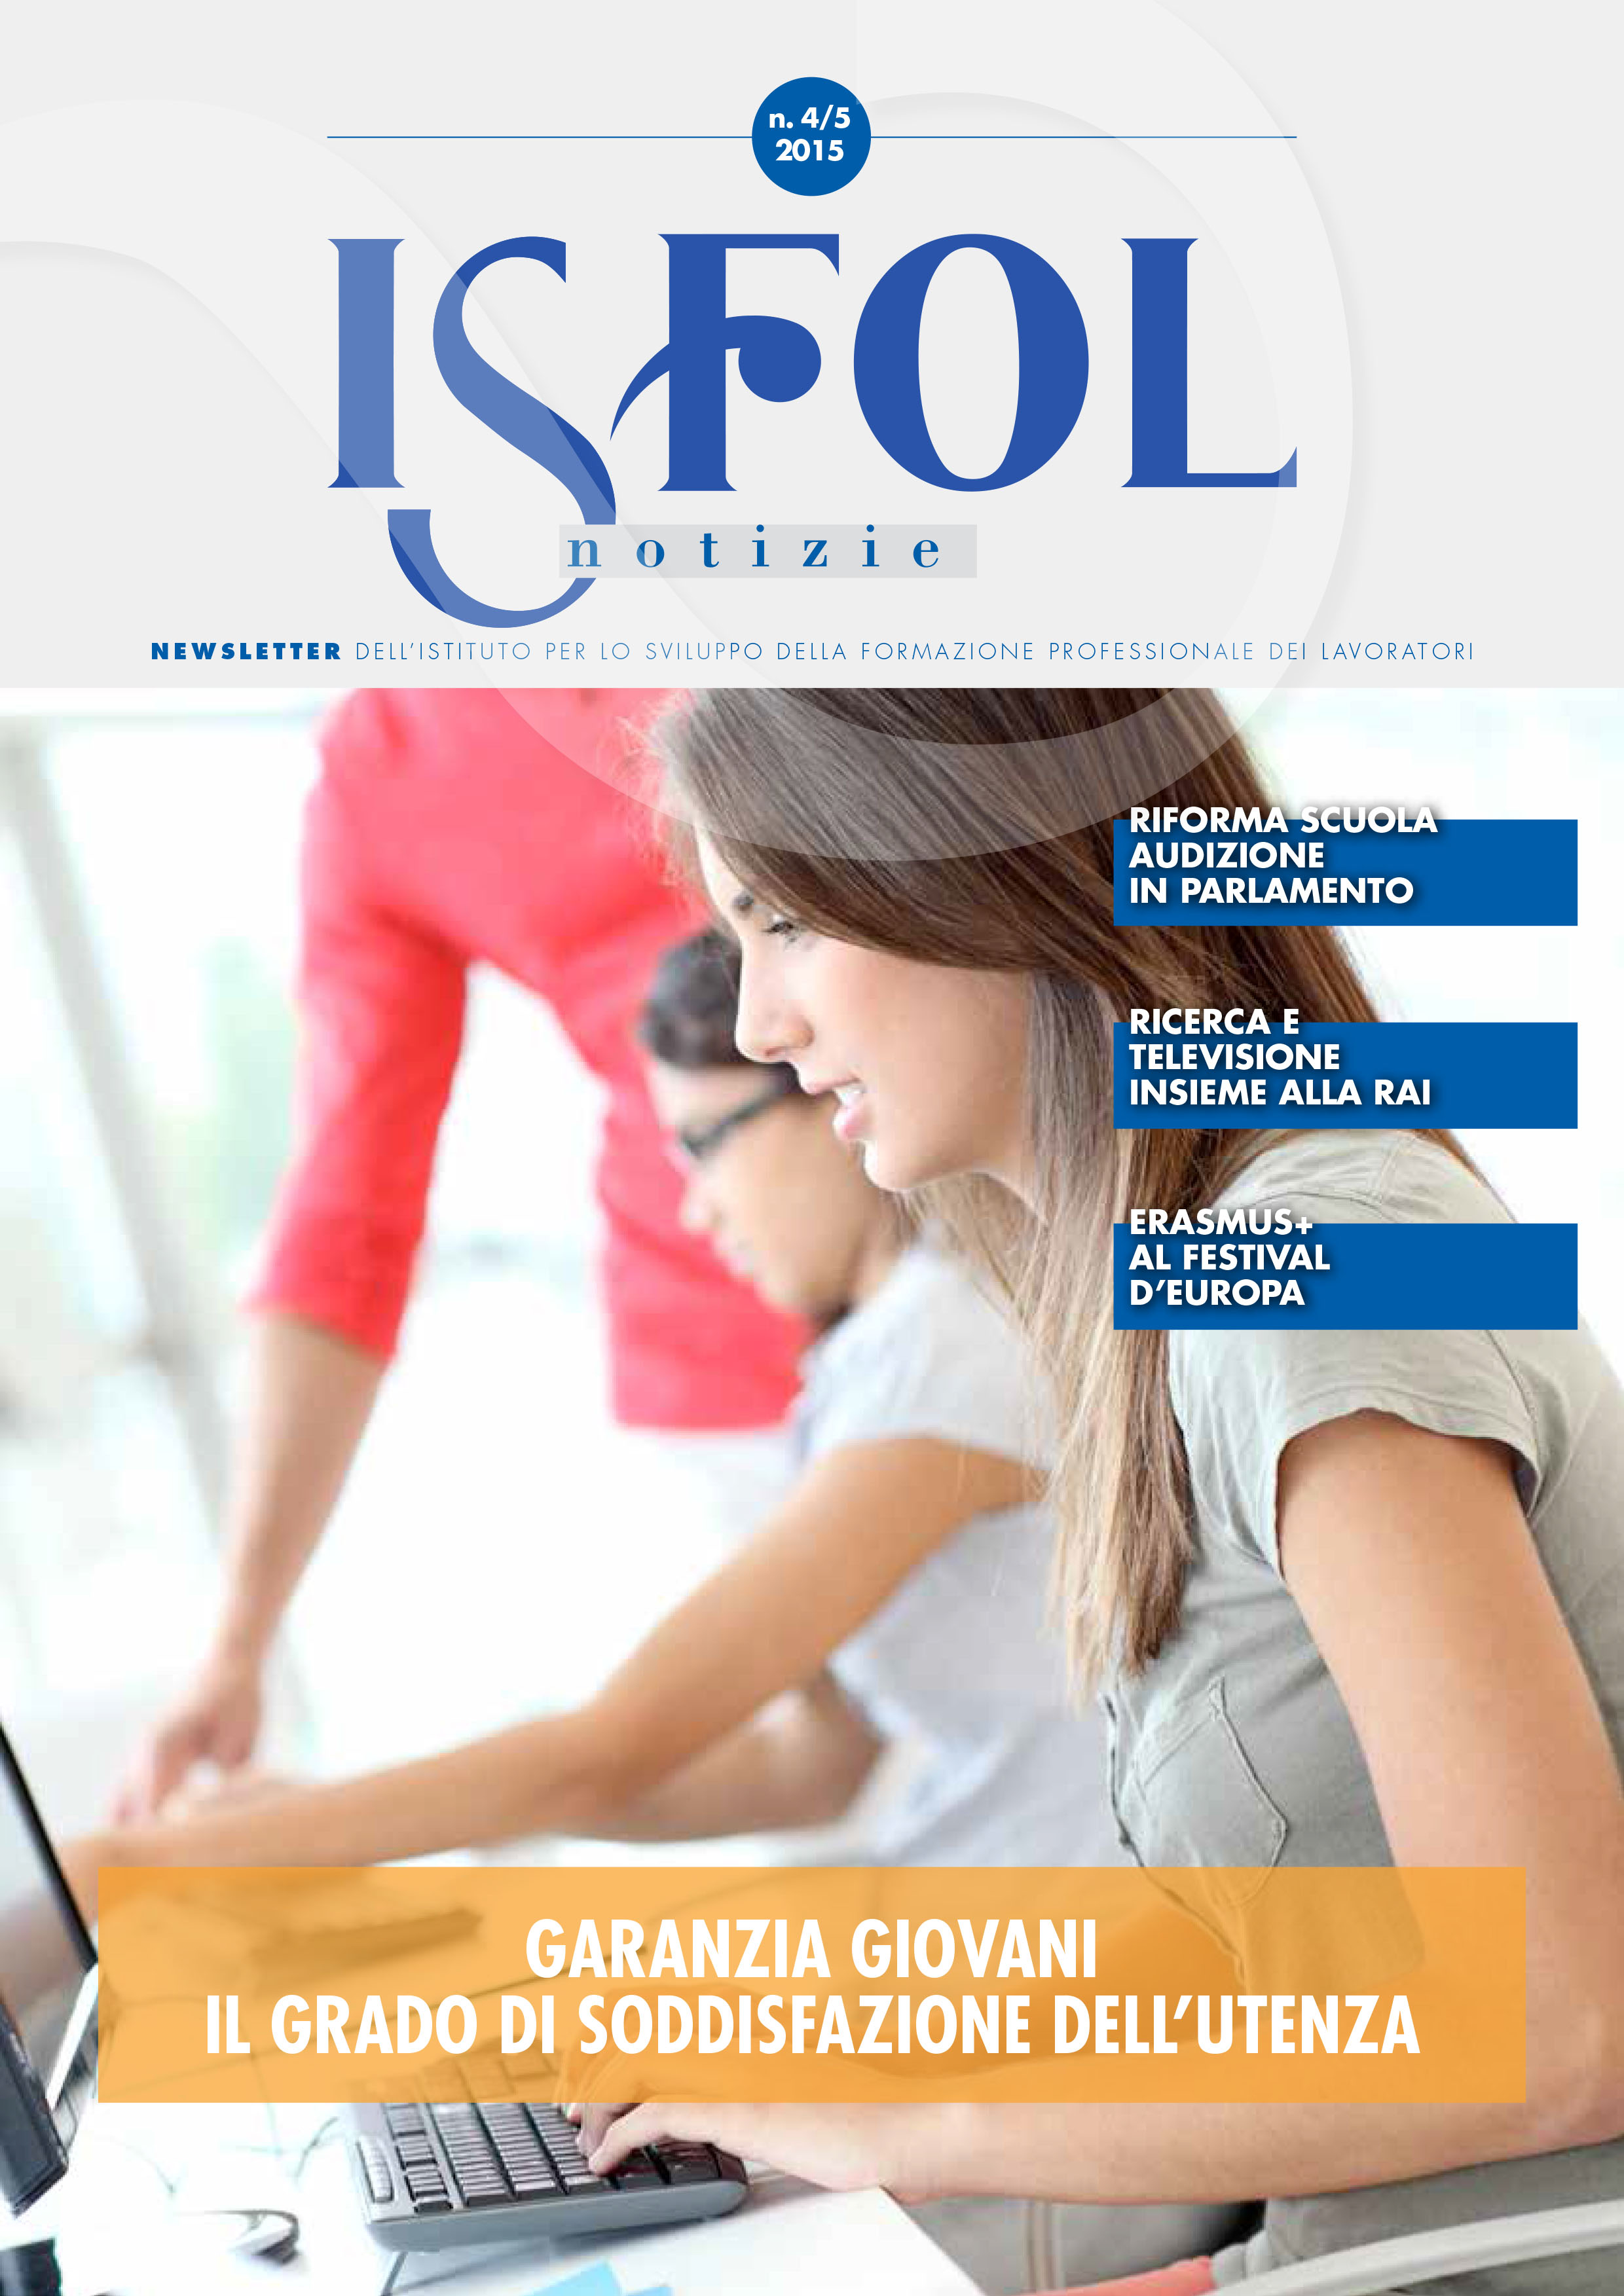 Isfol notizie 4/5 2015 cover